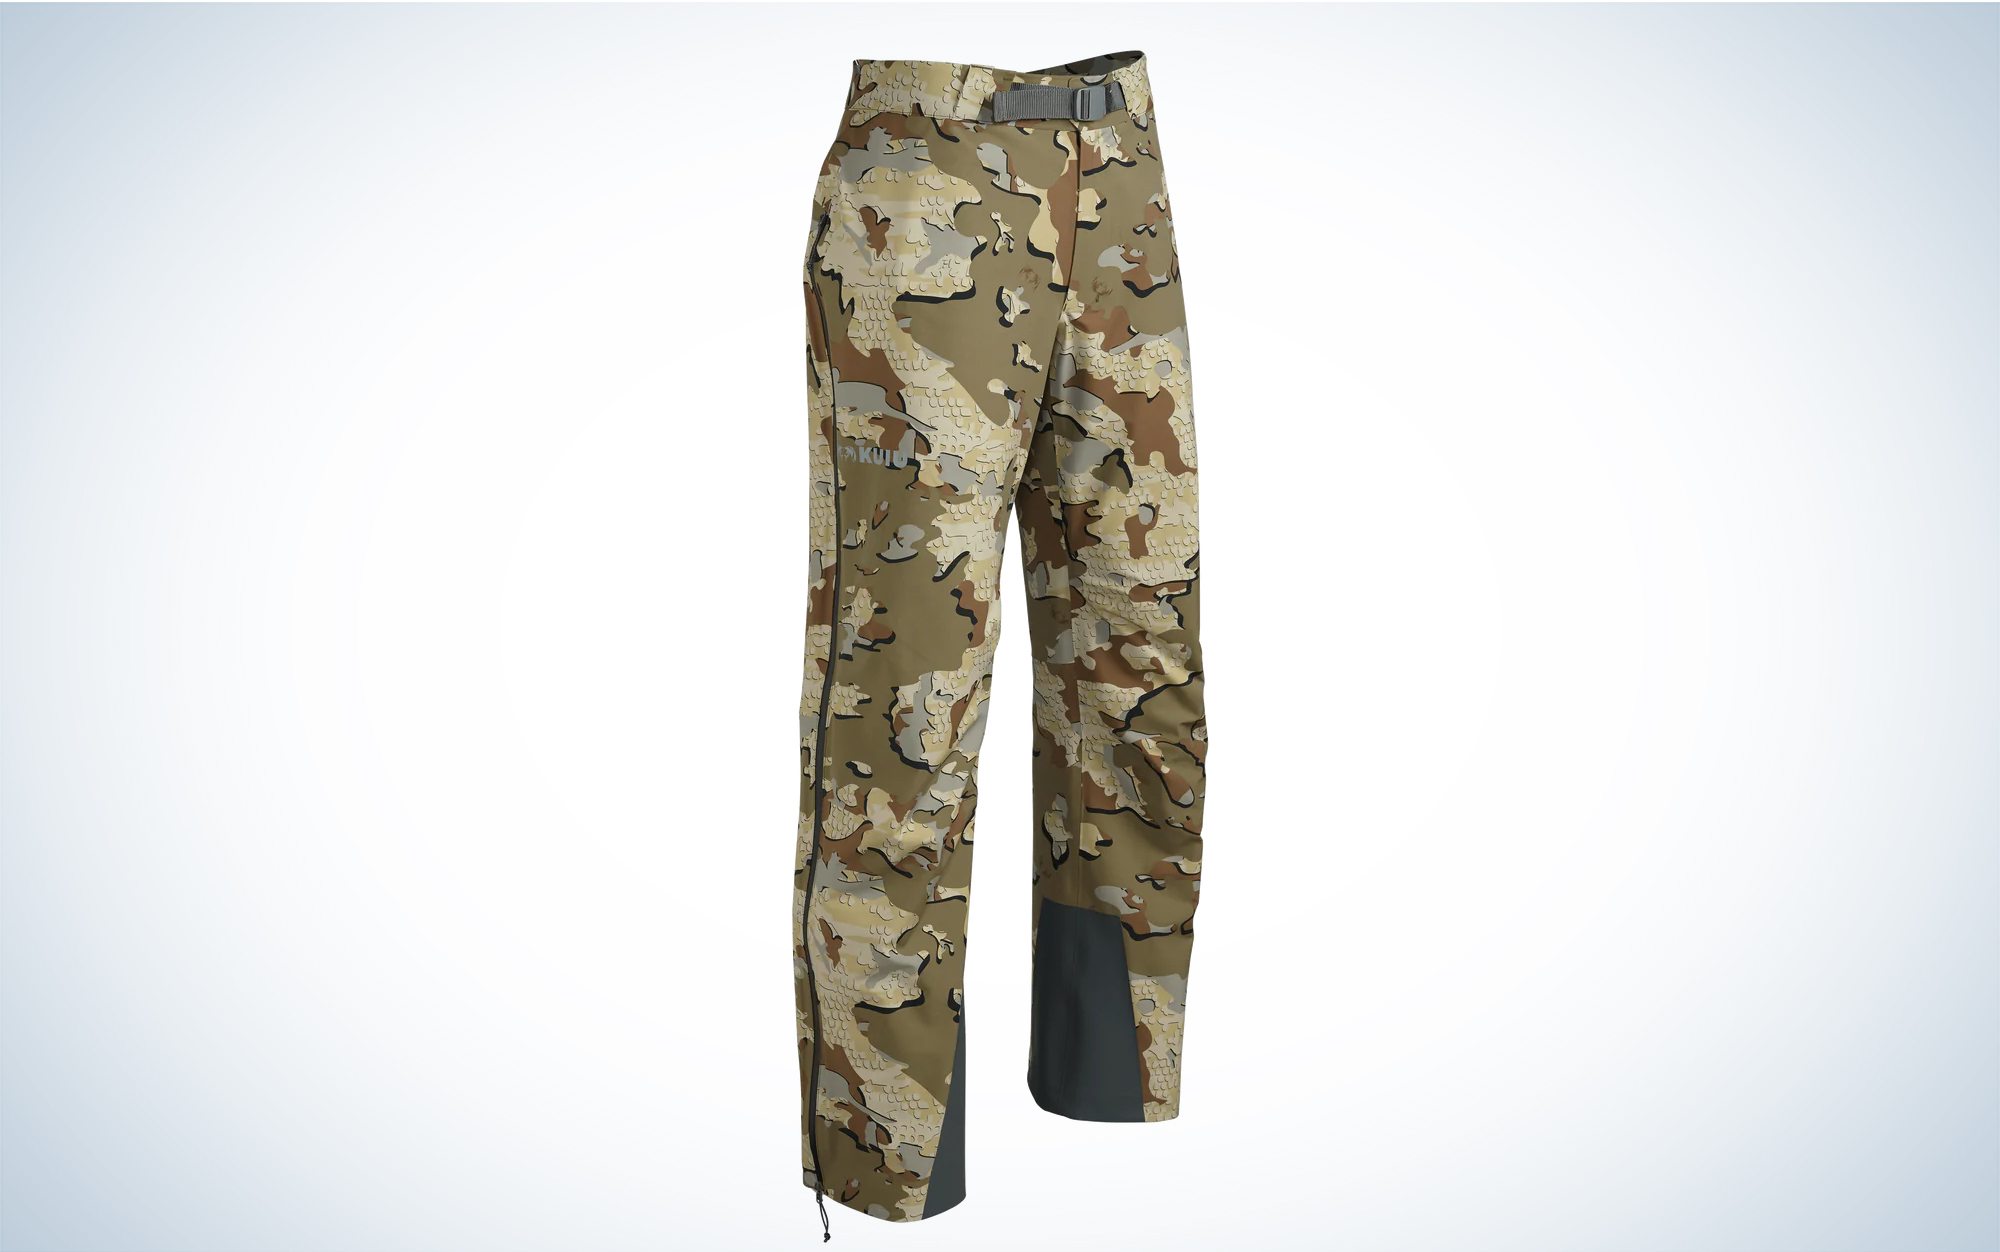 KUIU's Chugach TR rain pants are designed for ultralight hunting.